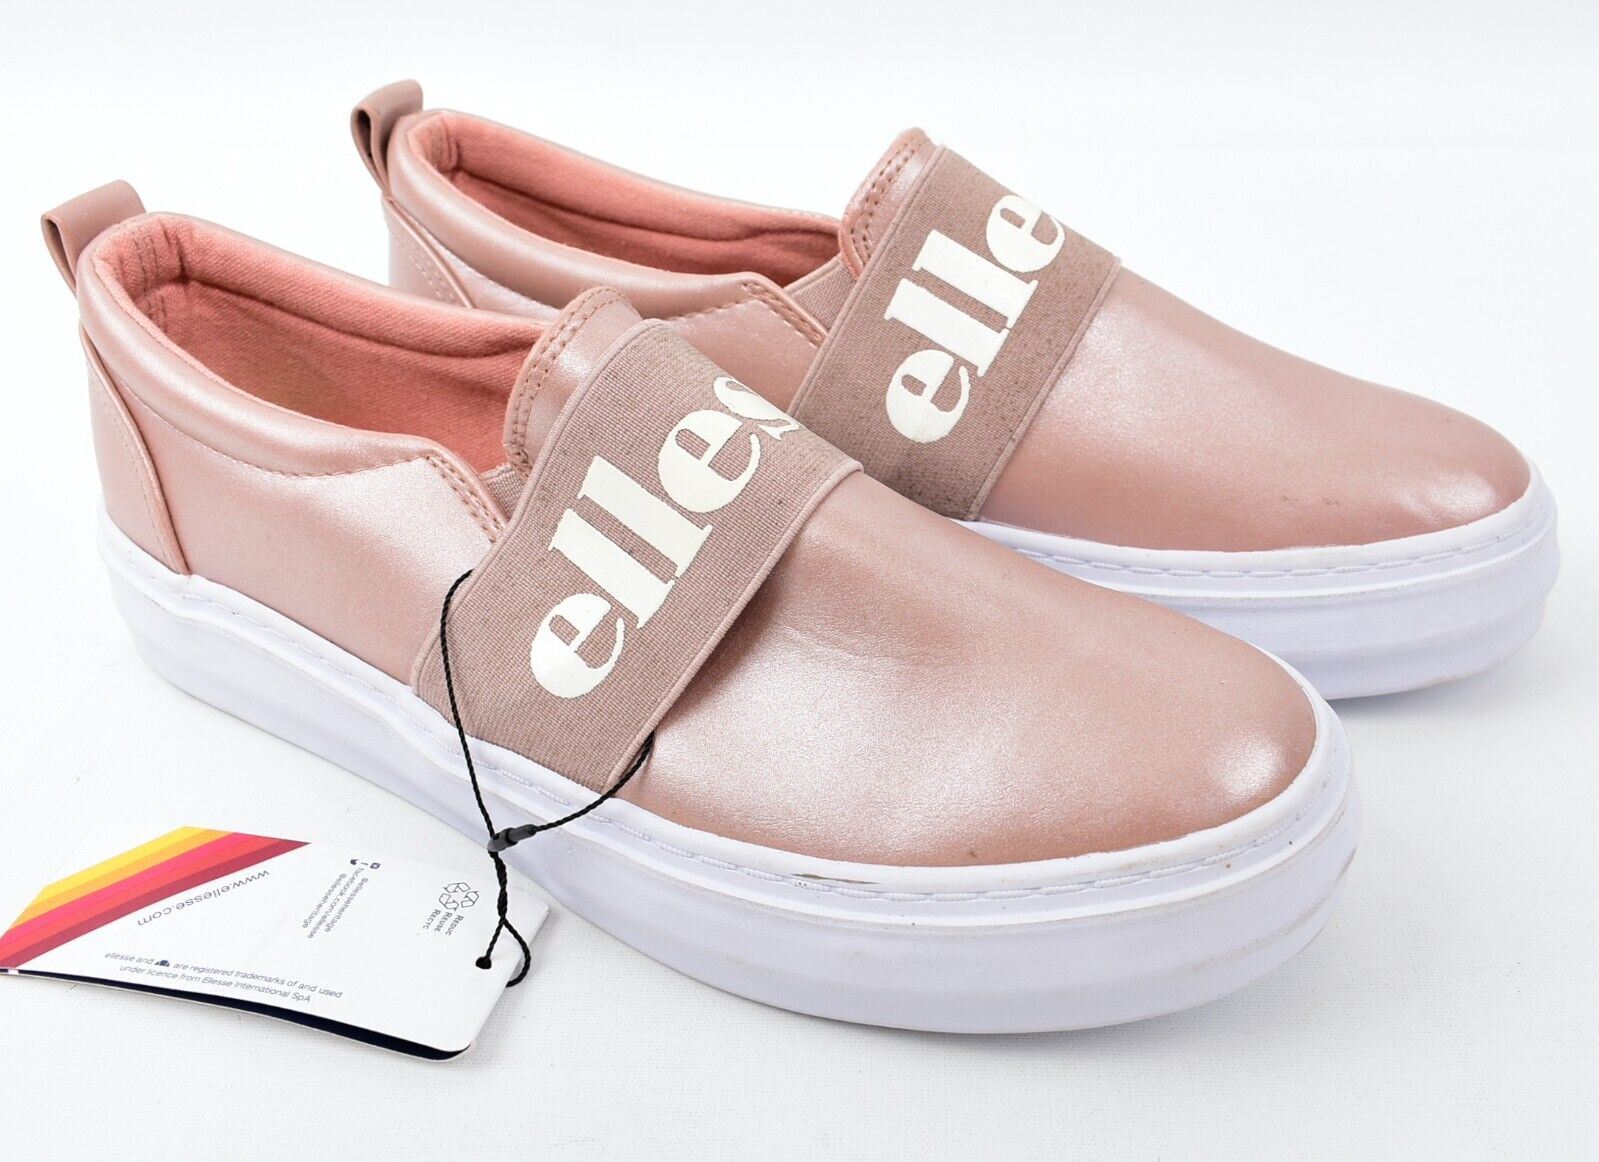 ELLESSE Womens PANFORTE Slip On Shoes Pumps, Rose Pink, size UK 7 /EU 41